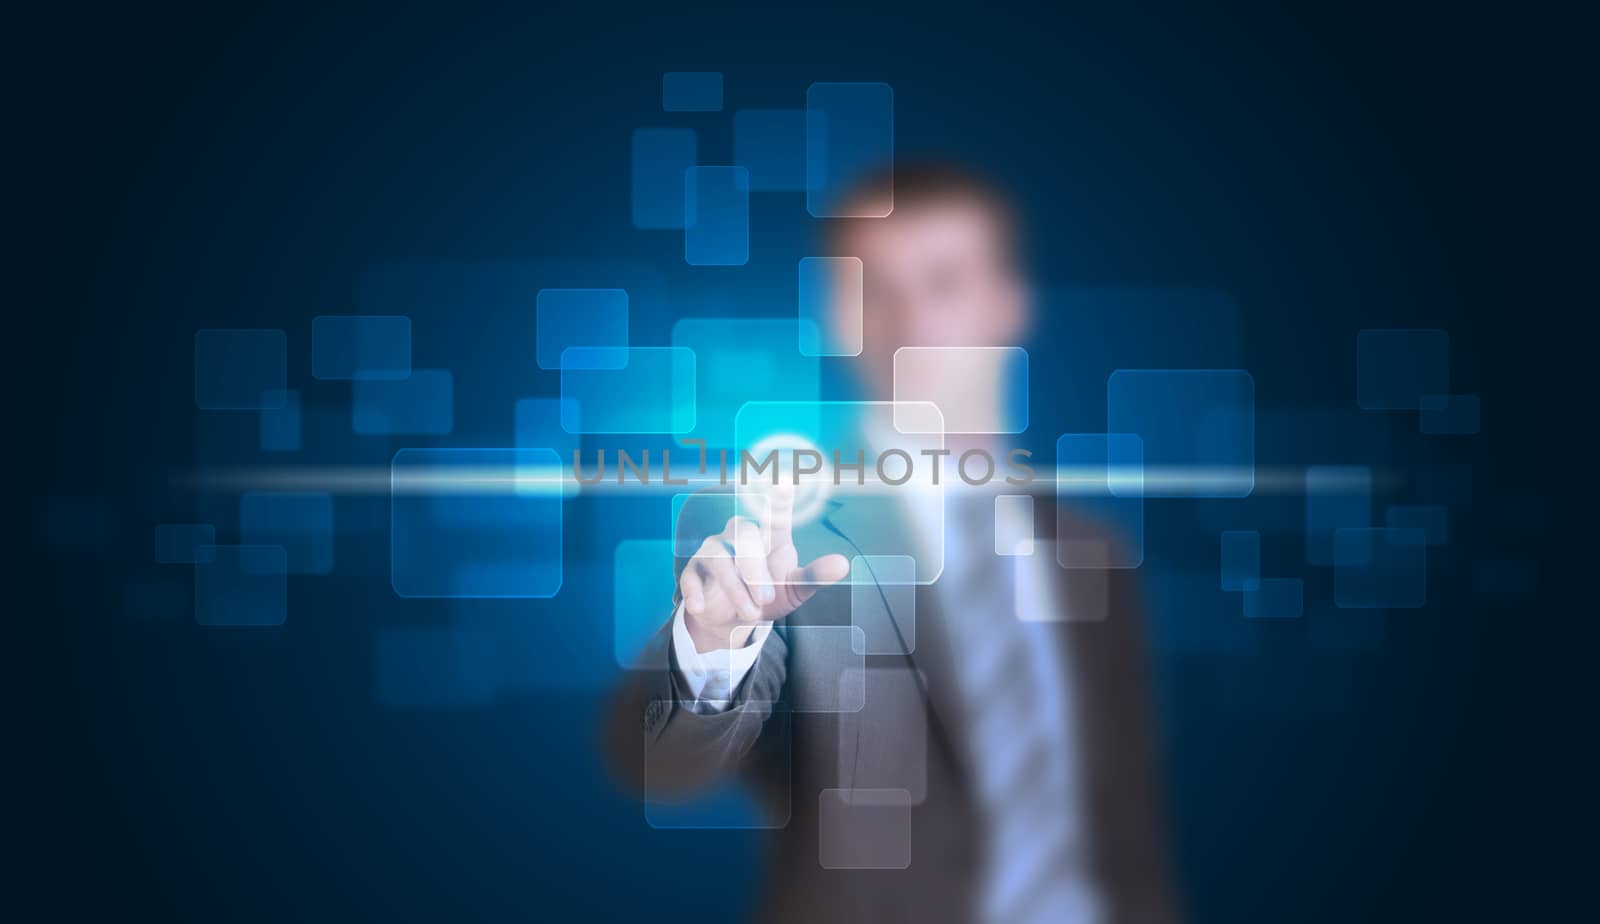 Businessman in suit finger presses virtual button. Blue rectangles as backdrop